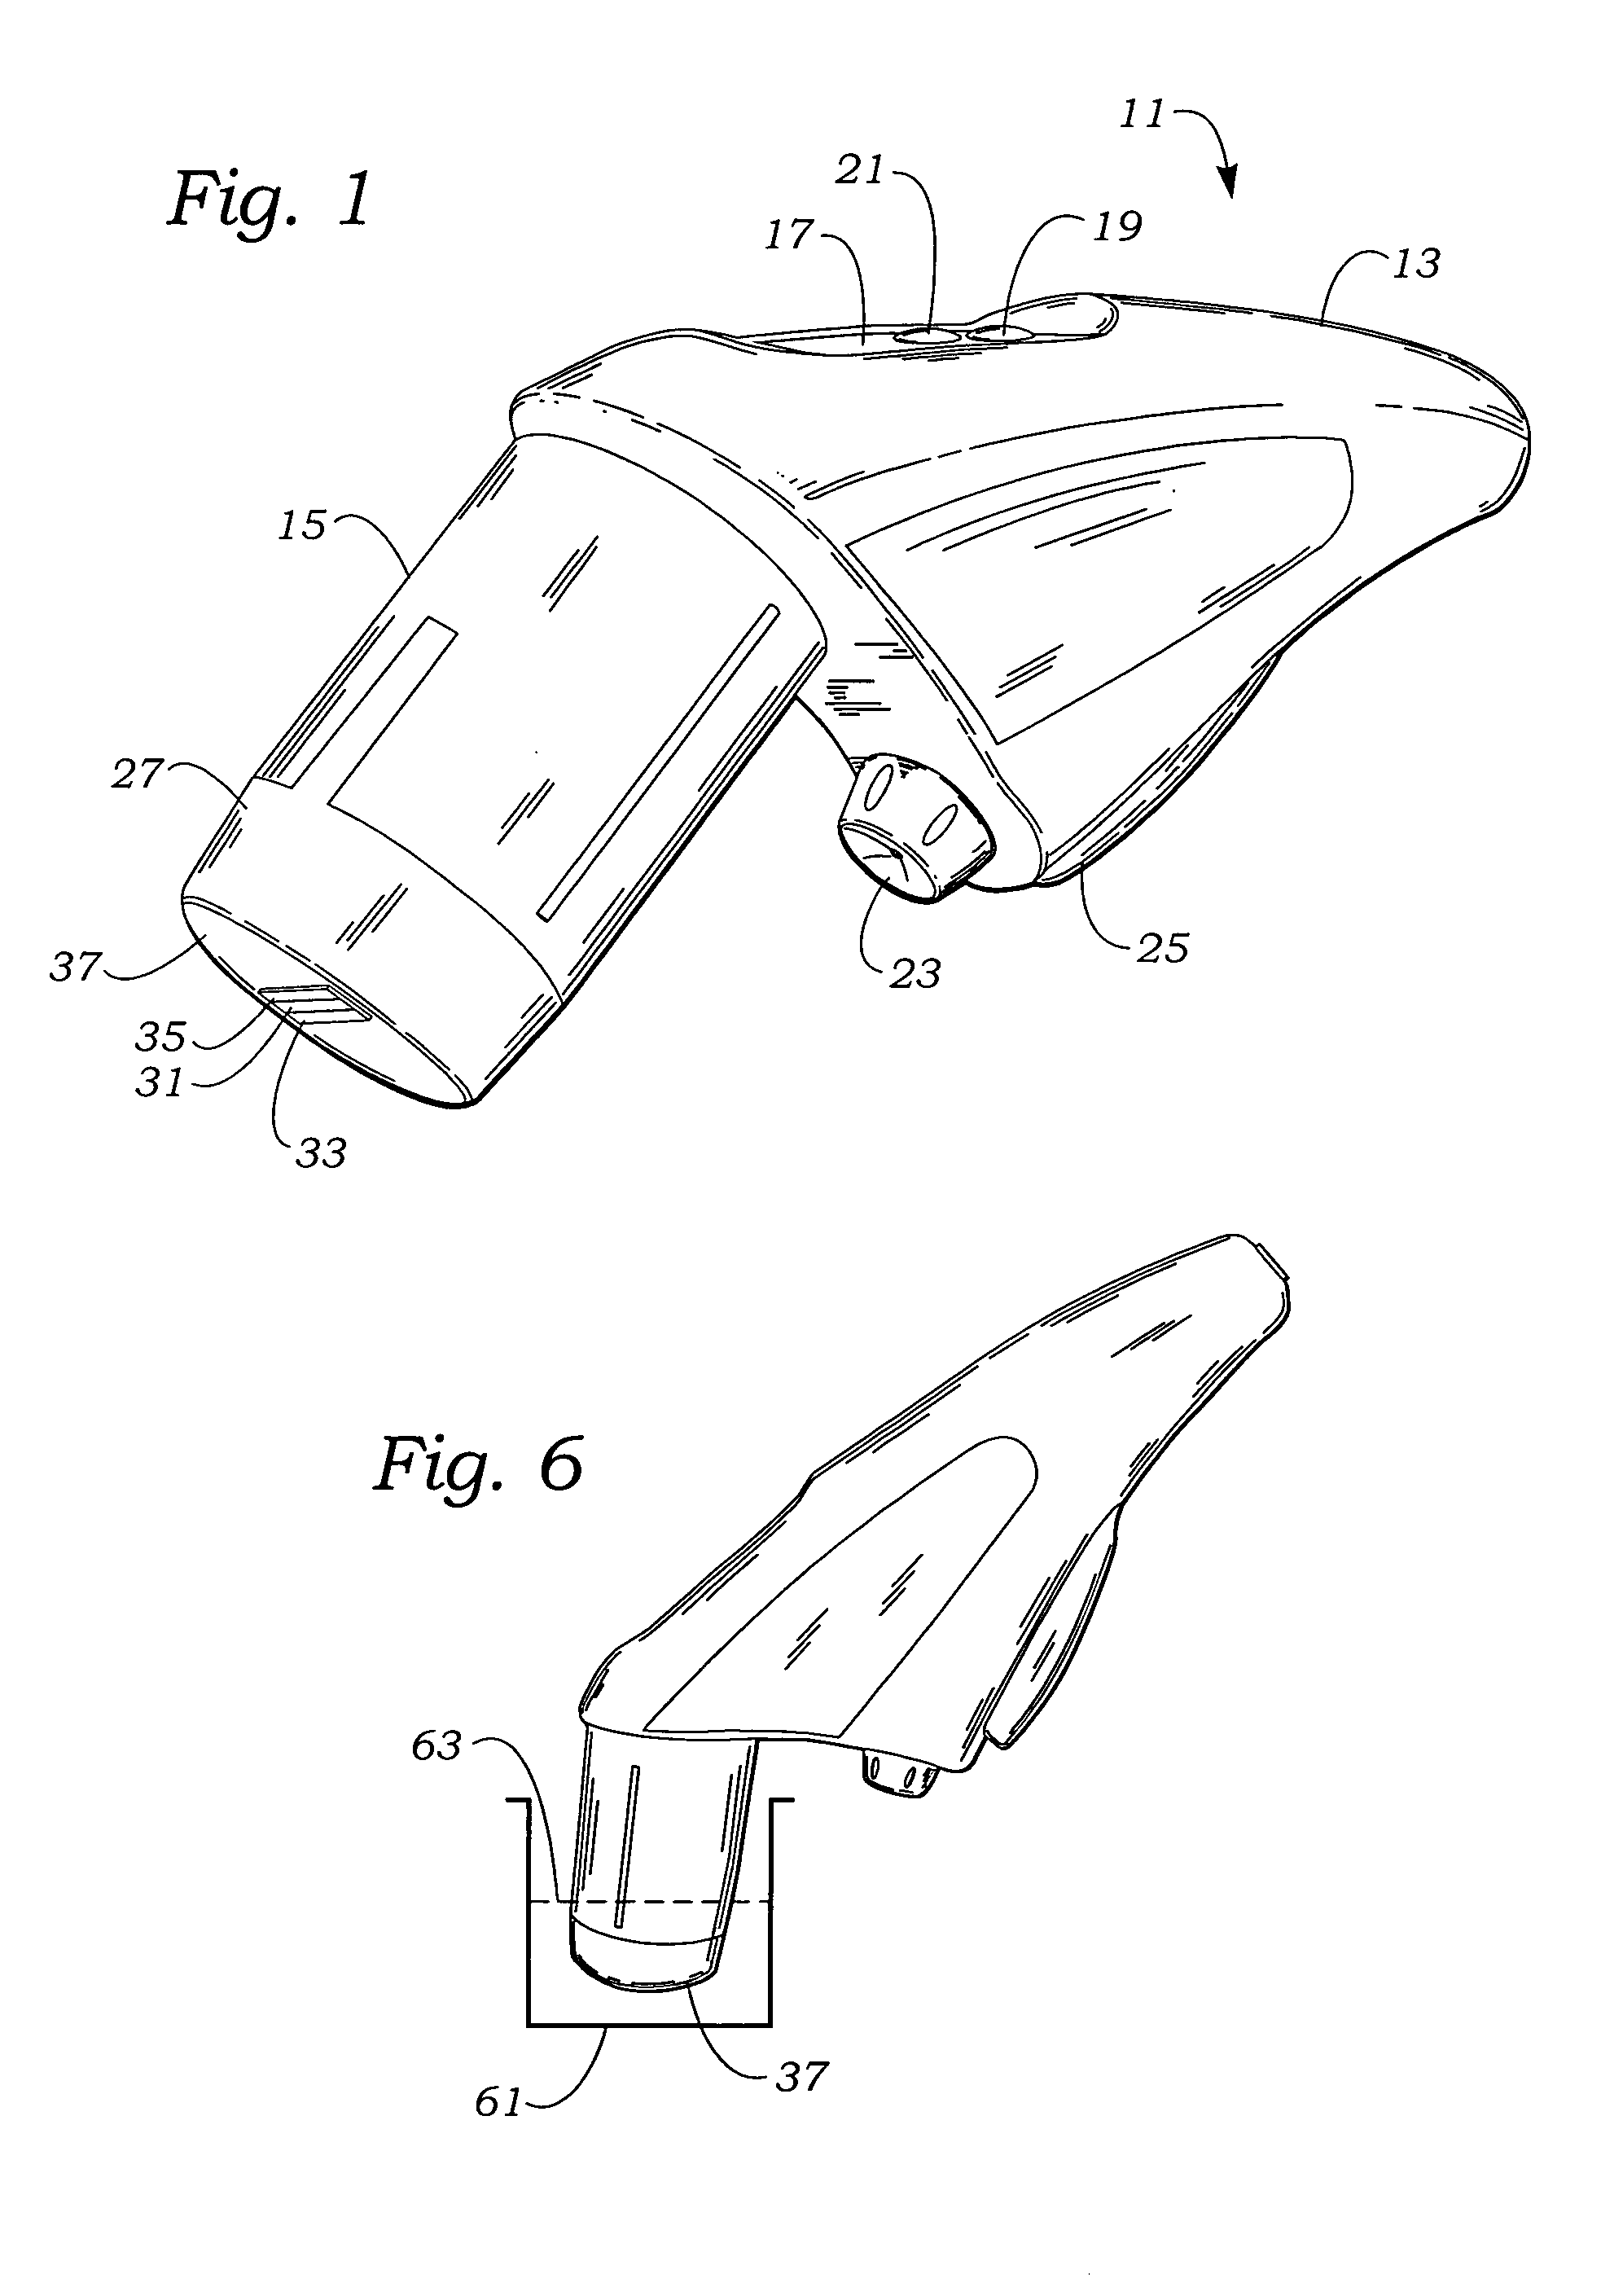 Portable ultrasonic cleaner